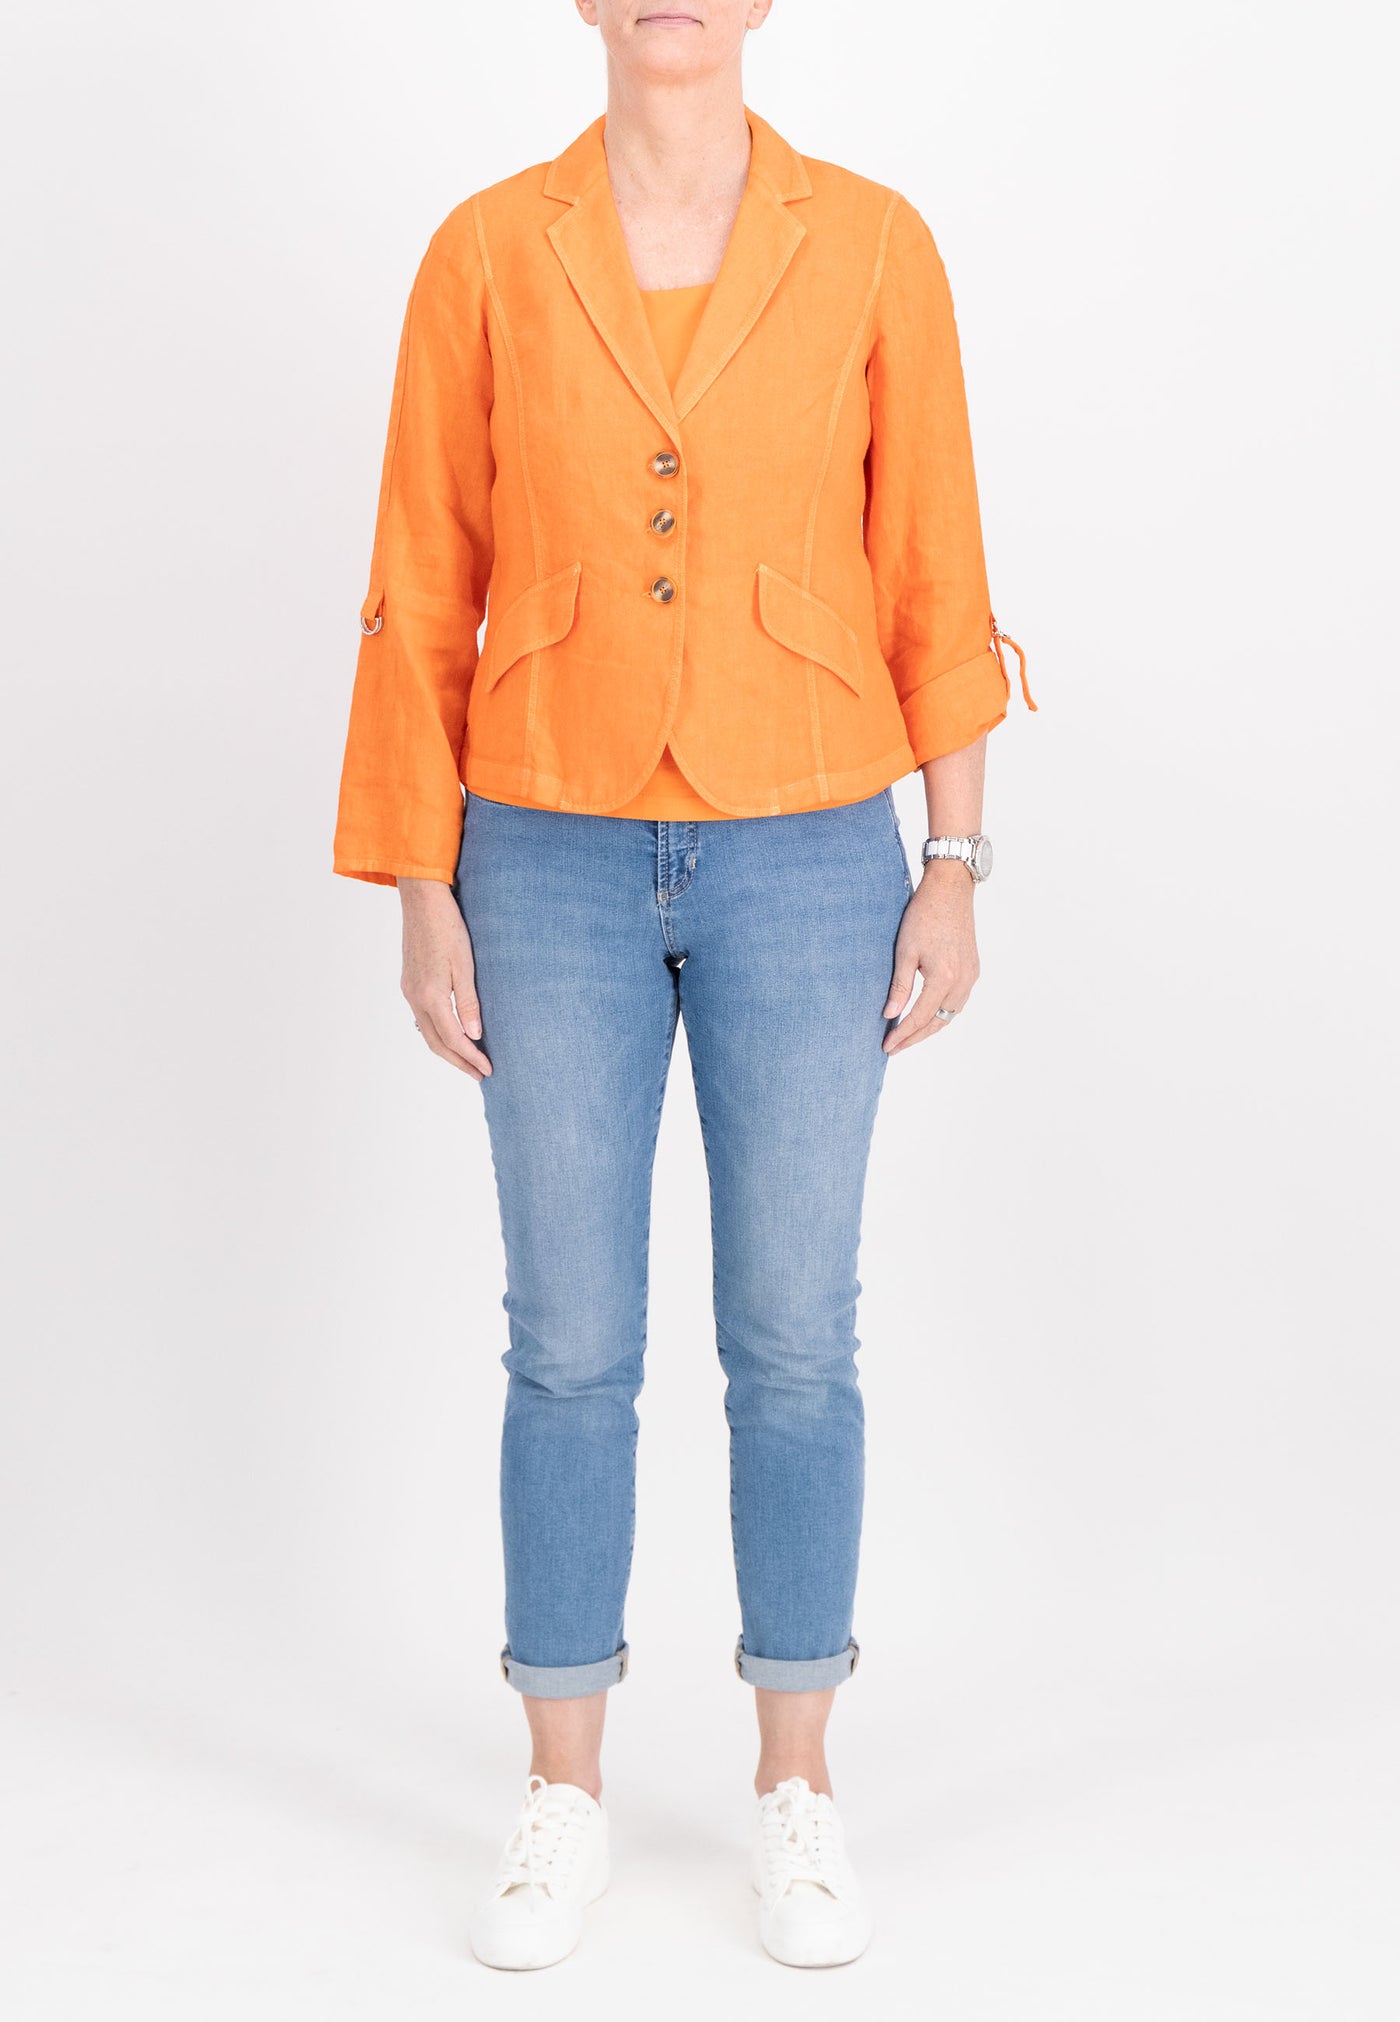 Orange Linen Jacket With Turn Up Sleeves